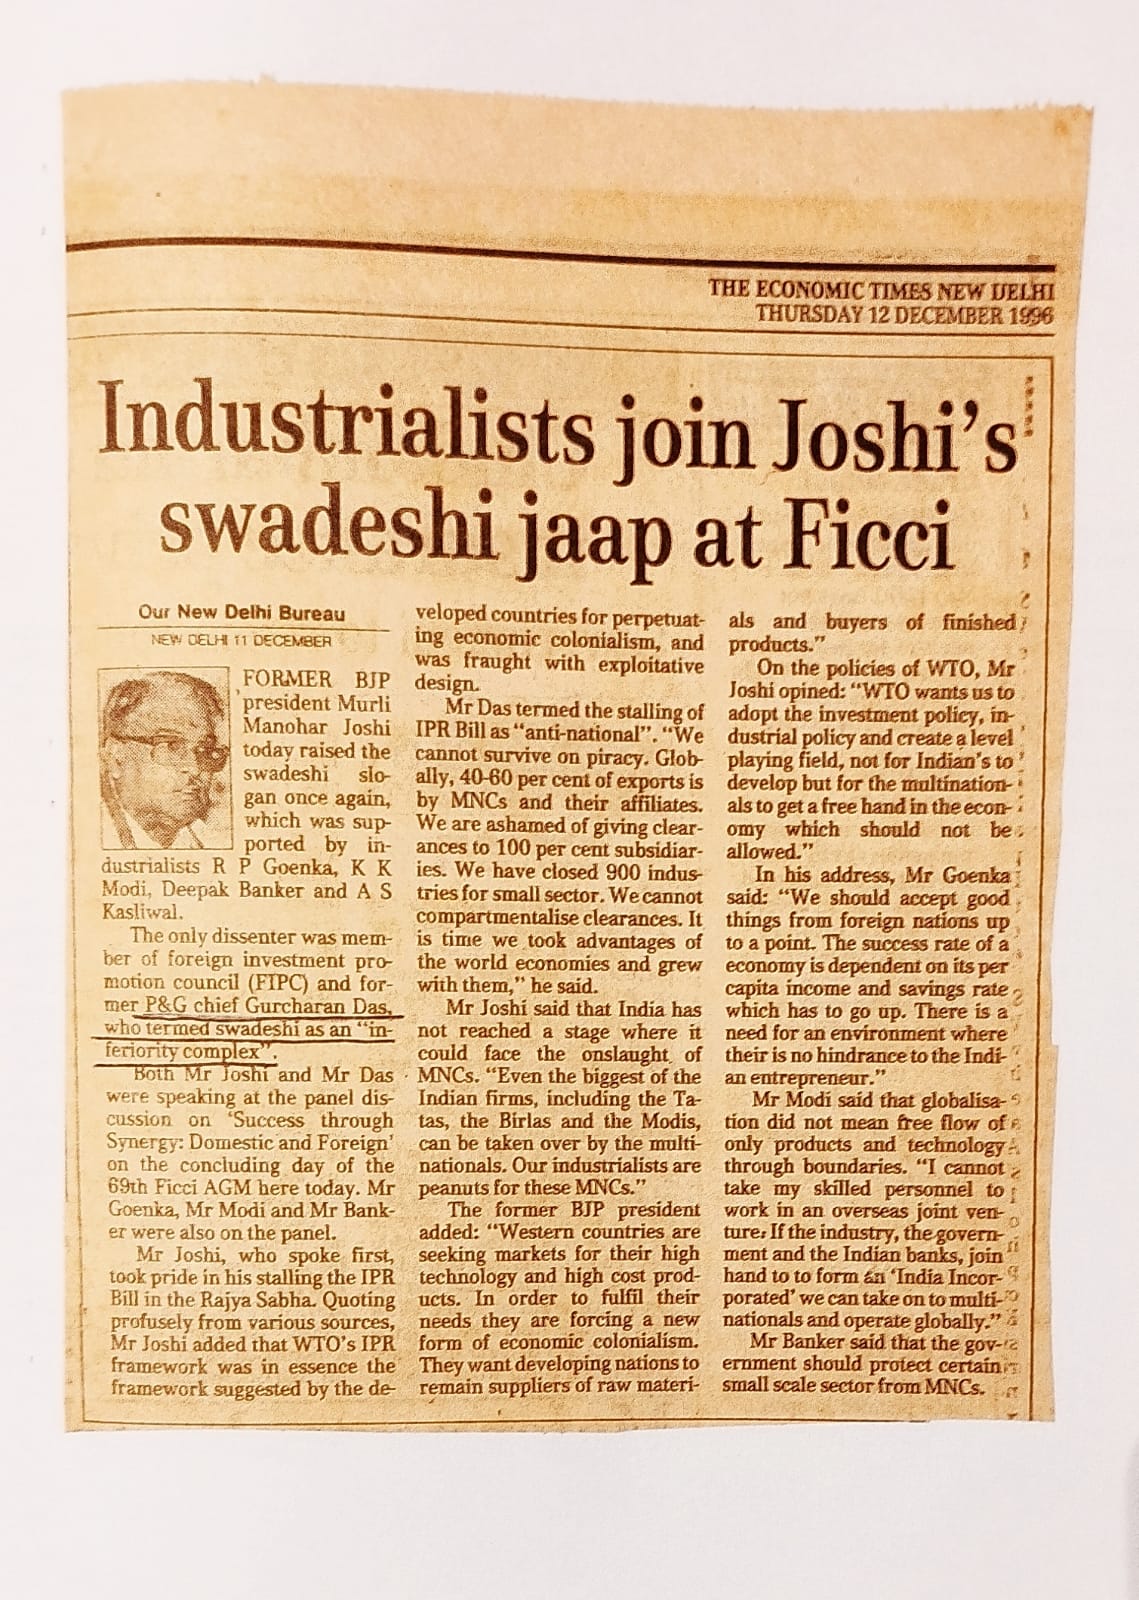 Industrialists join Joshi's swadeshi jaap at Ficci